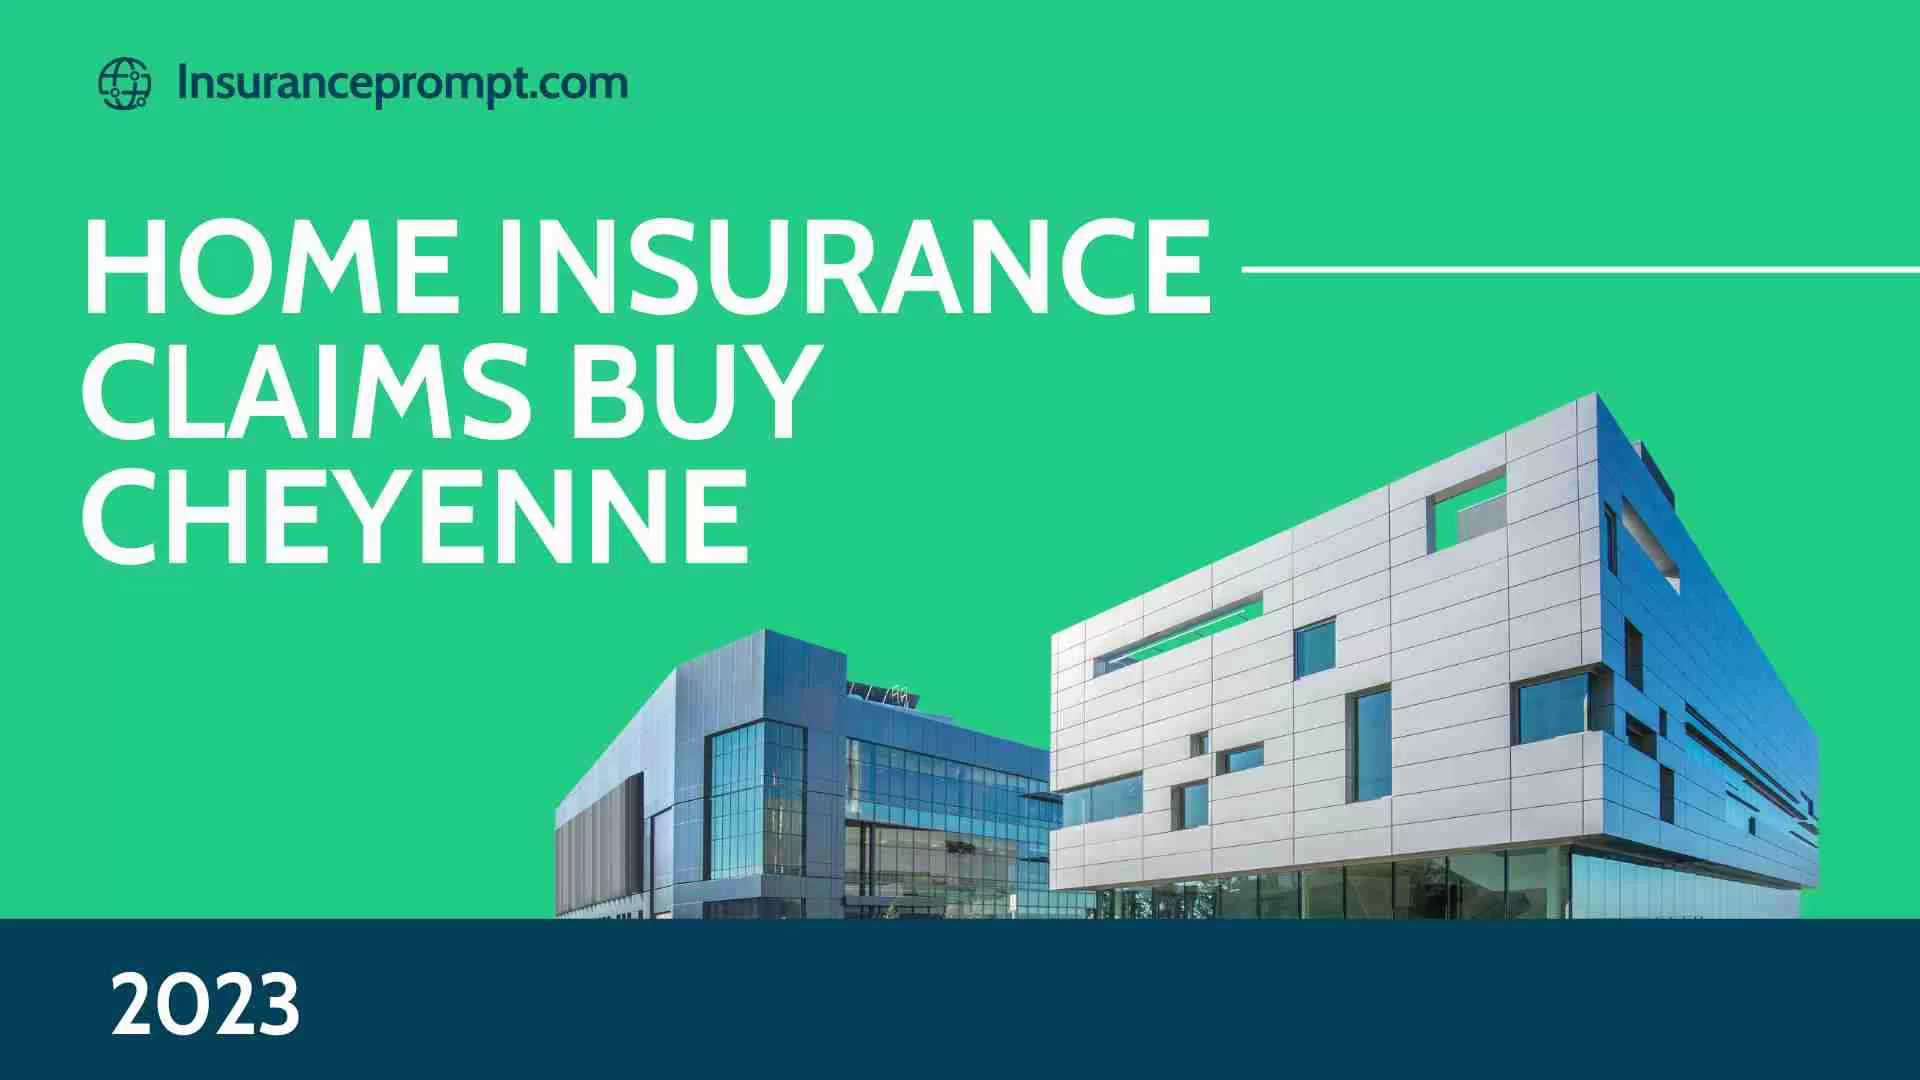 Home insurance claims buy Cheyenne(2023 Update)